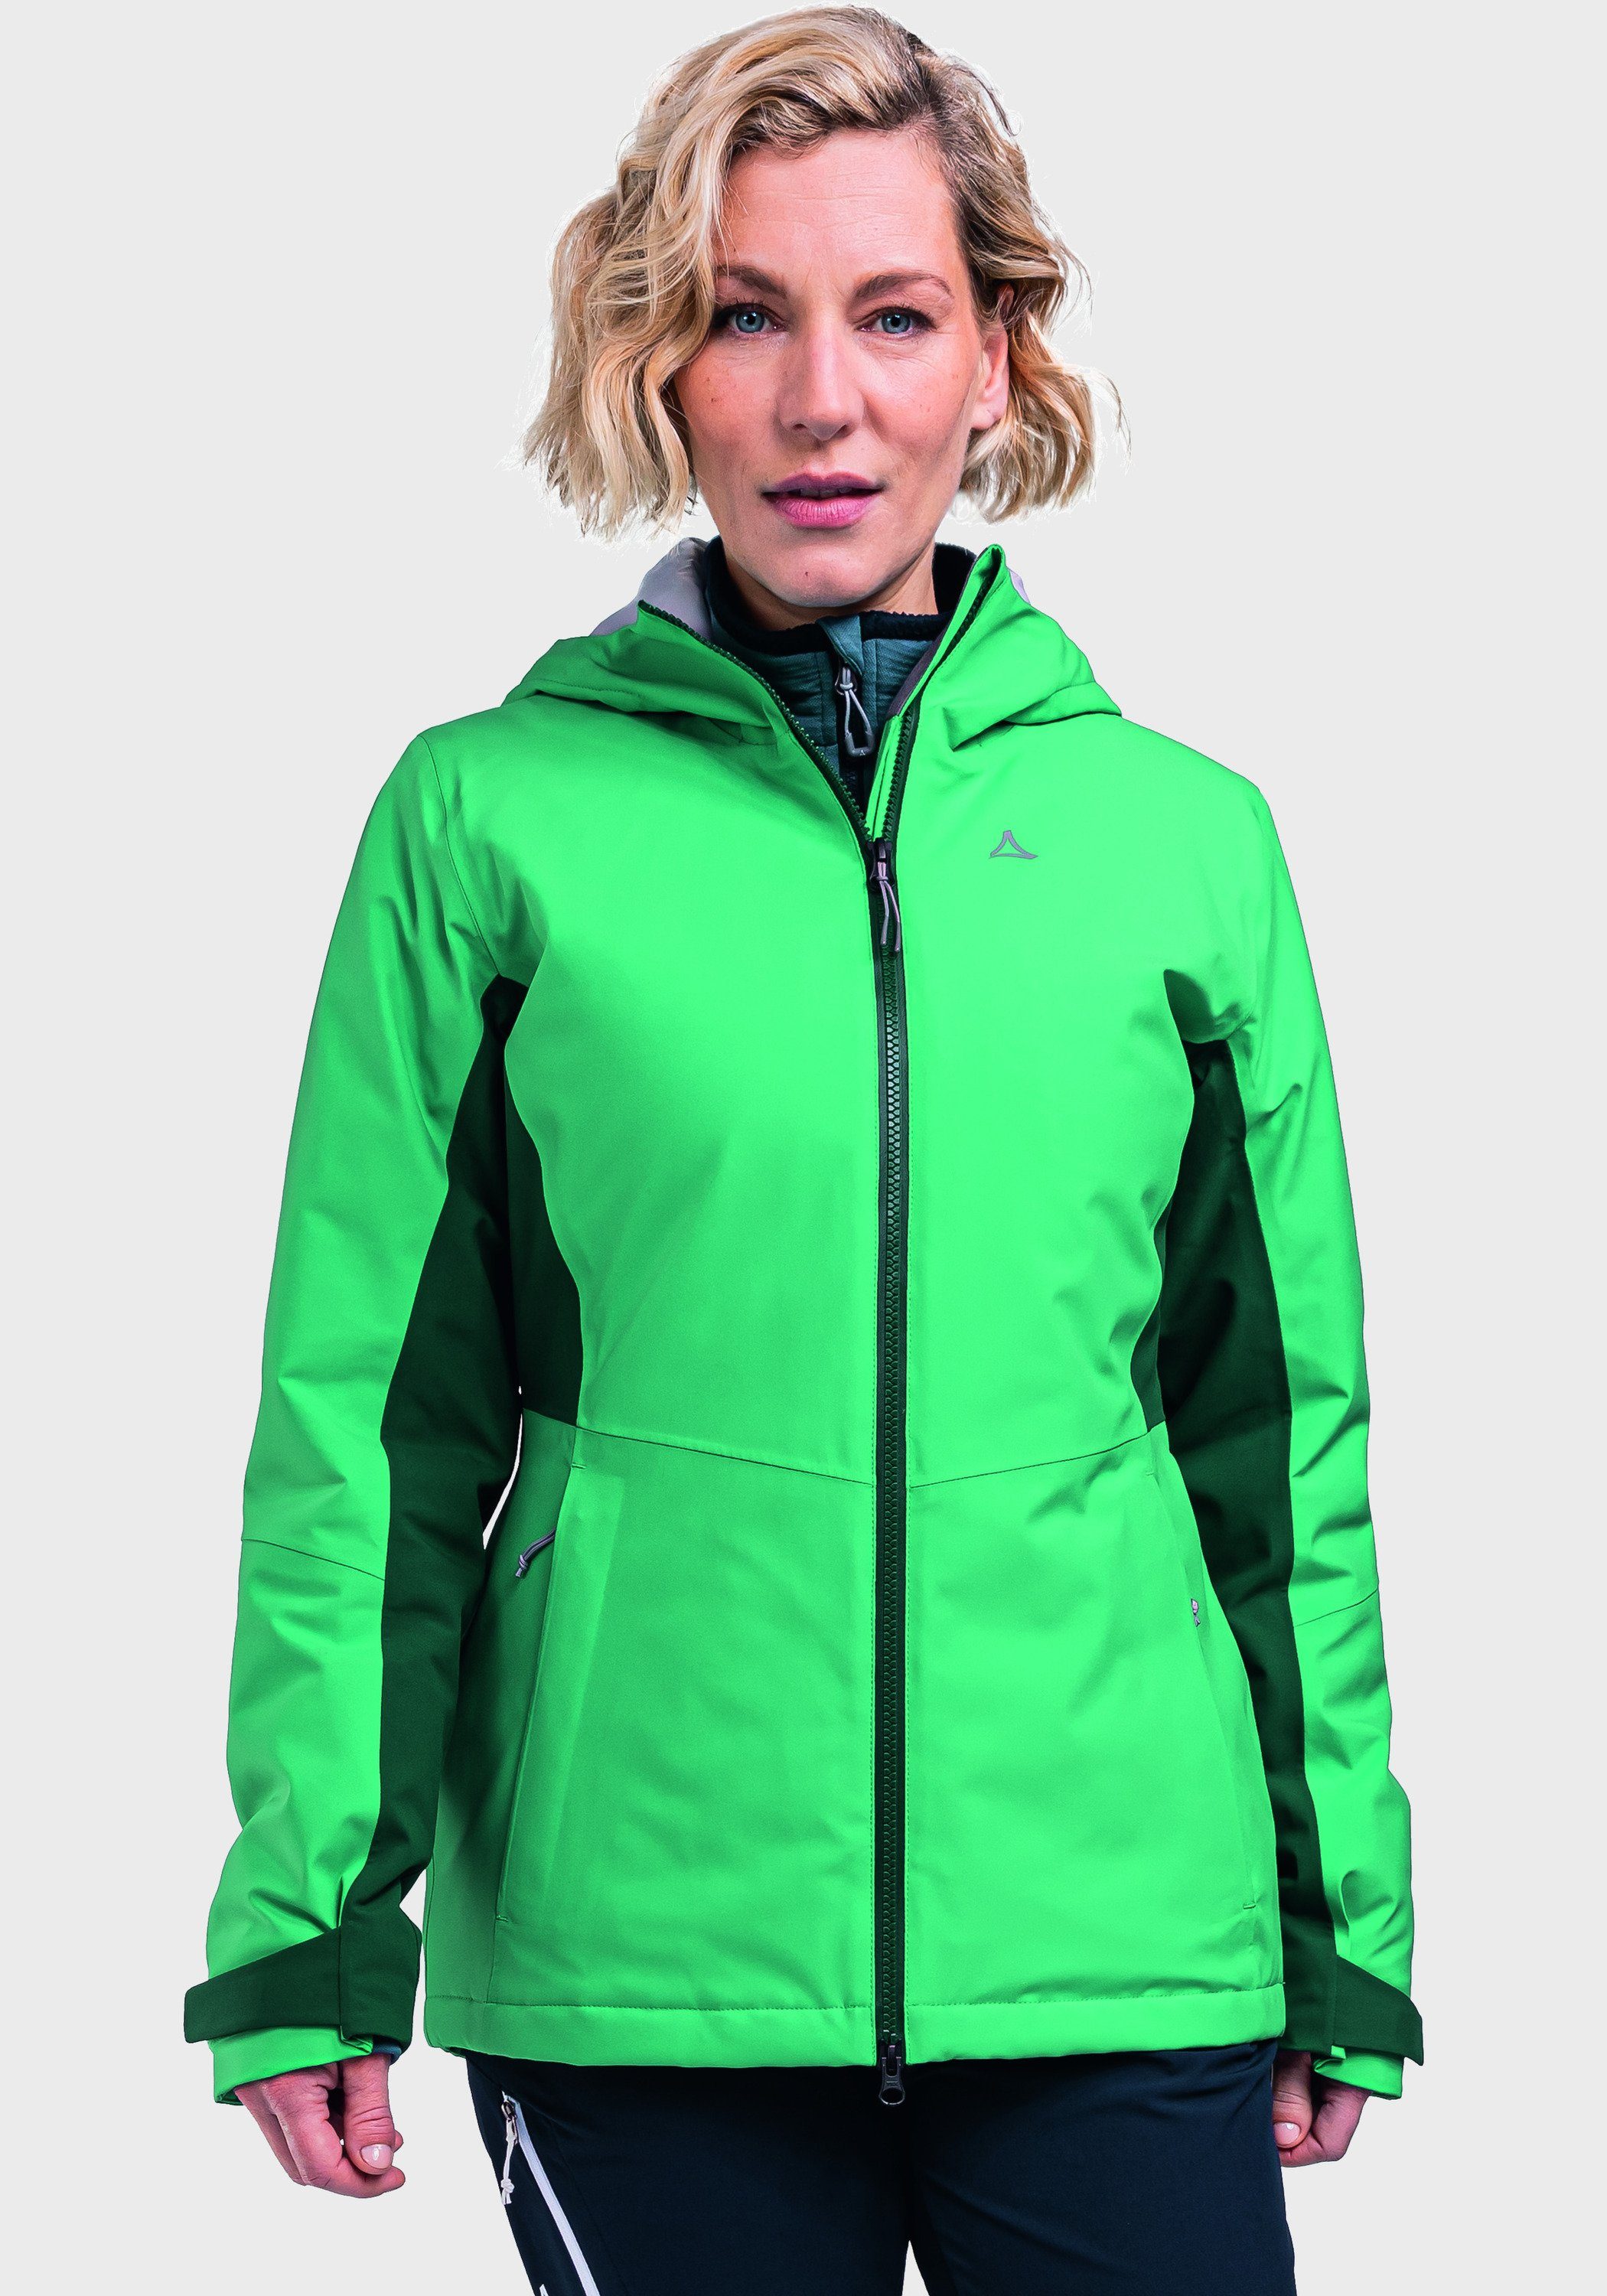 Torspitze Schöffel L Outdoorjacke Jacket grün